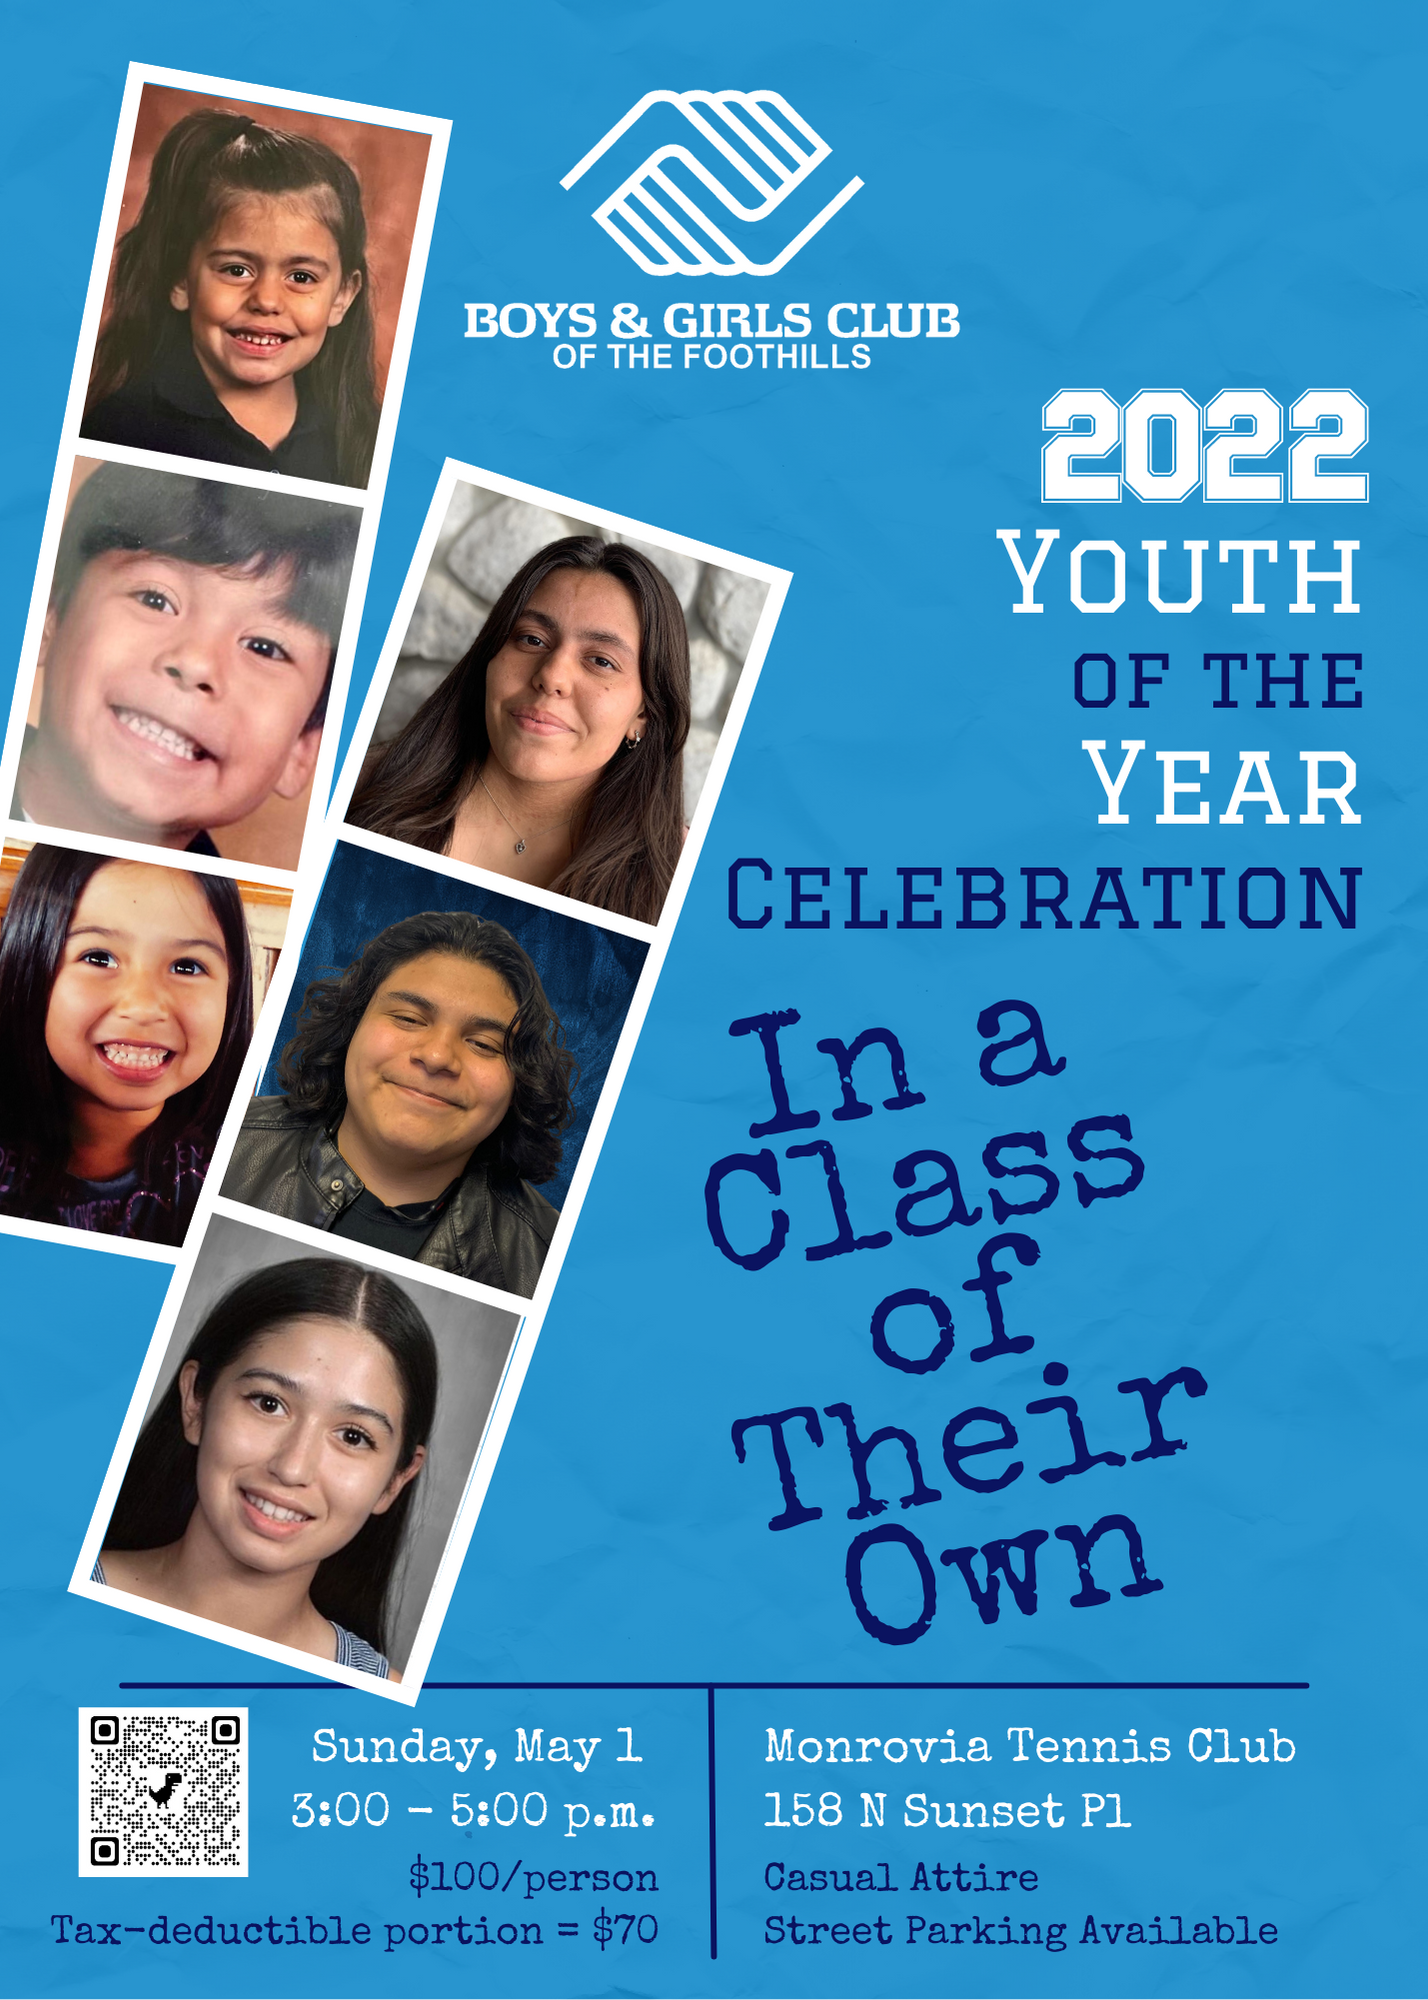 Boys & Girls Club Youth of the Year celebration flyer 